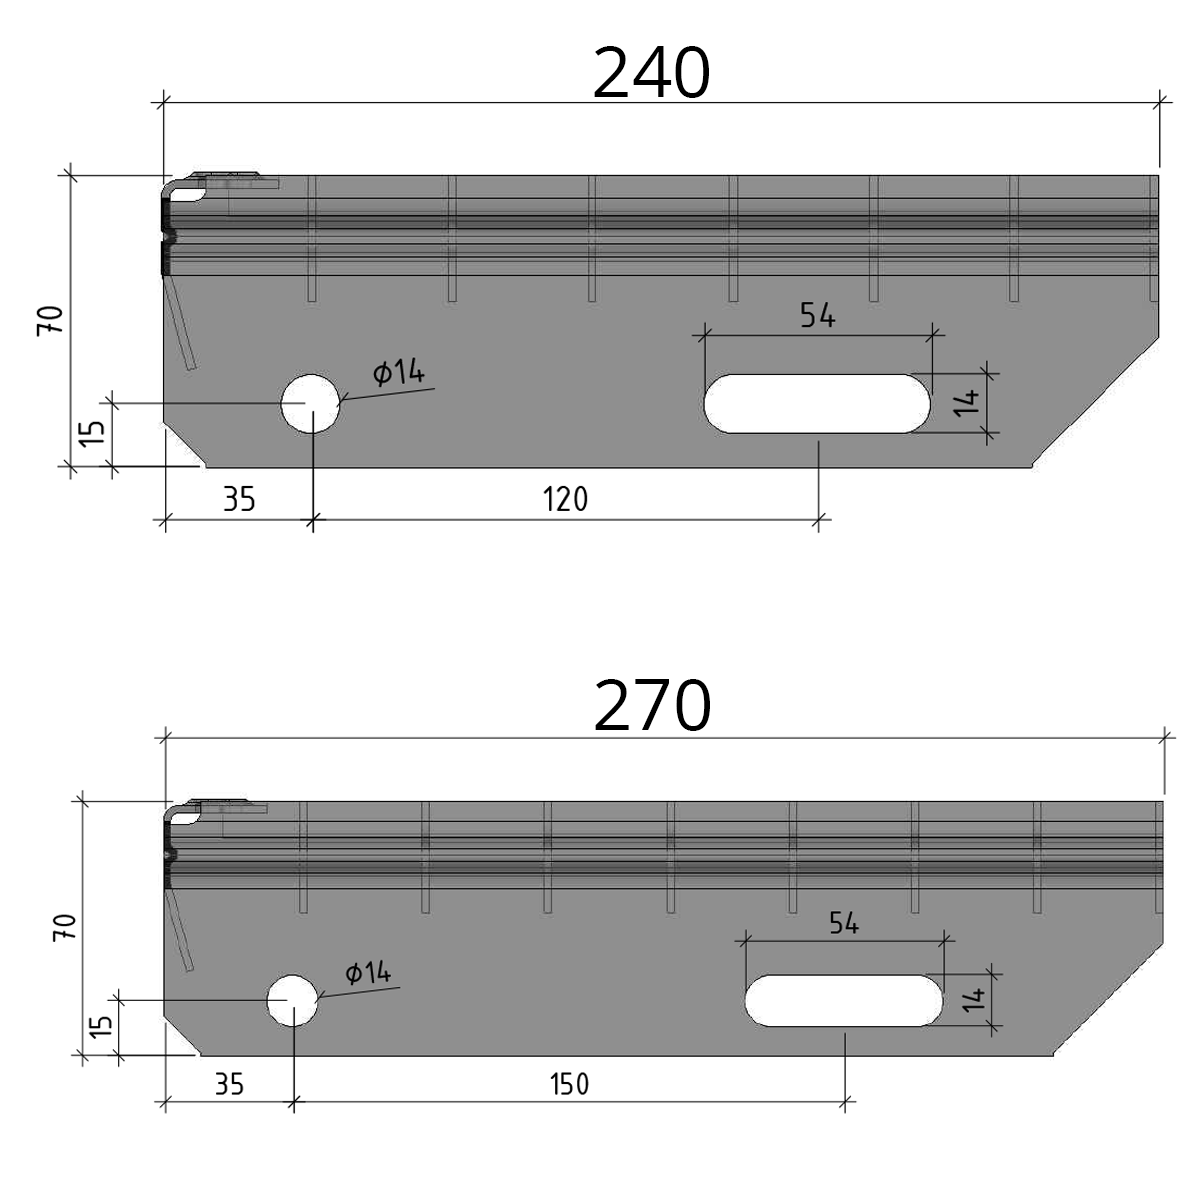 Gitterroststufe Treppenstufe | Maße: 1000x270 mm 30/30 mm | S235JR (St37-2), im Vollbad feuerverzinkt